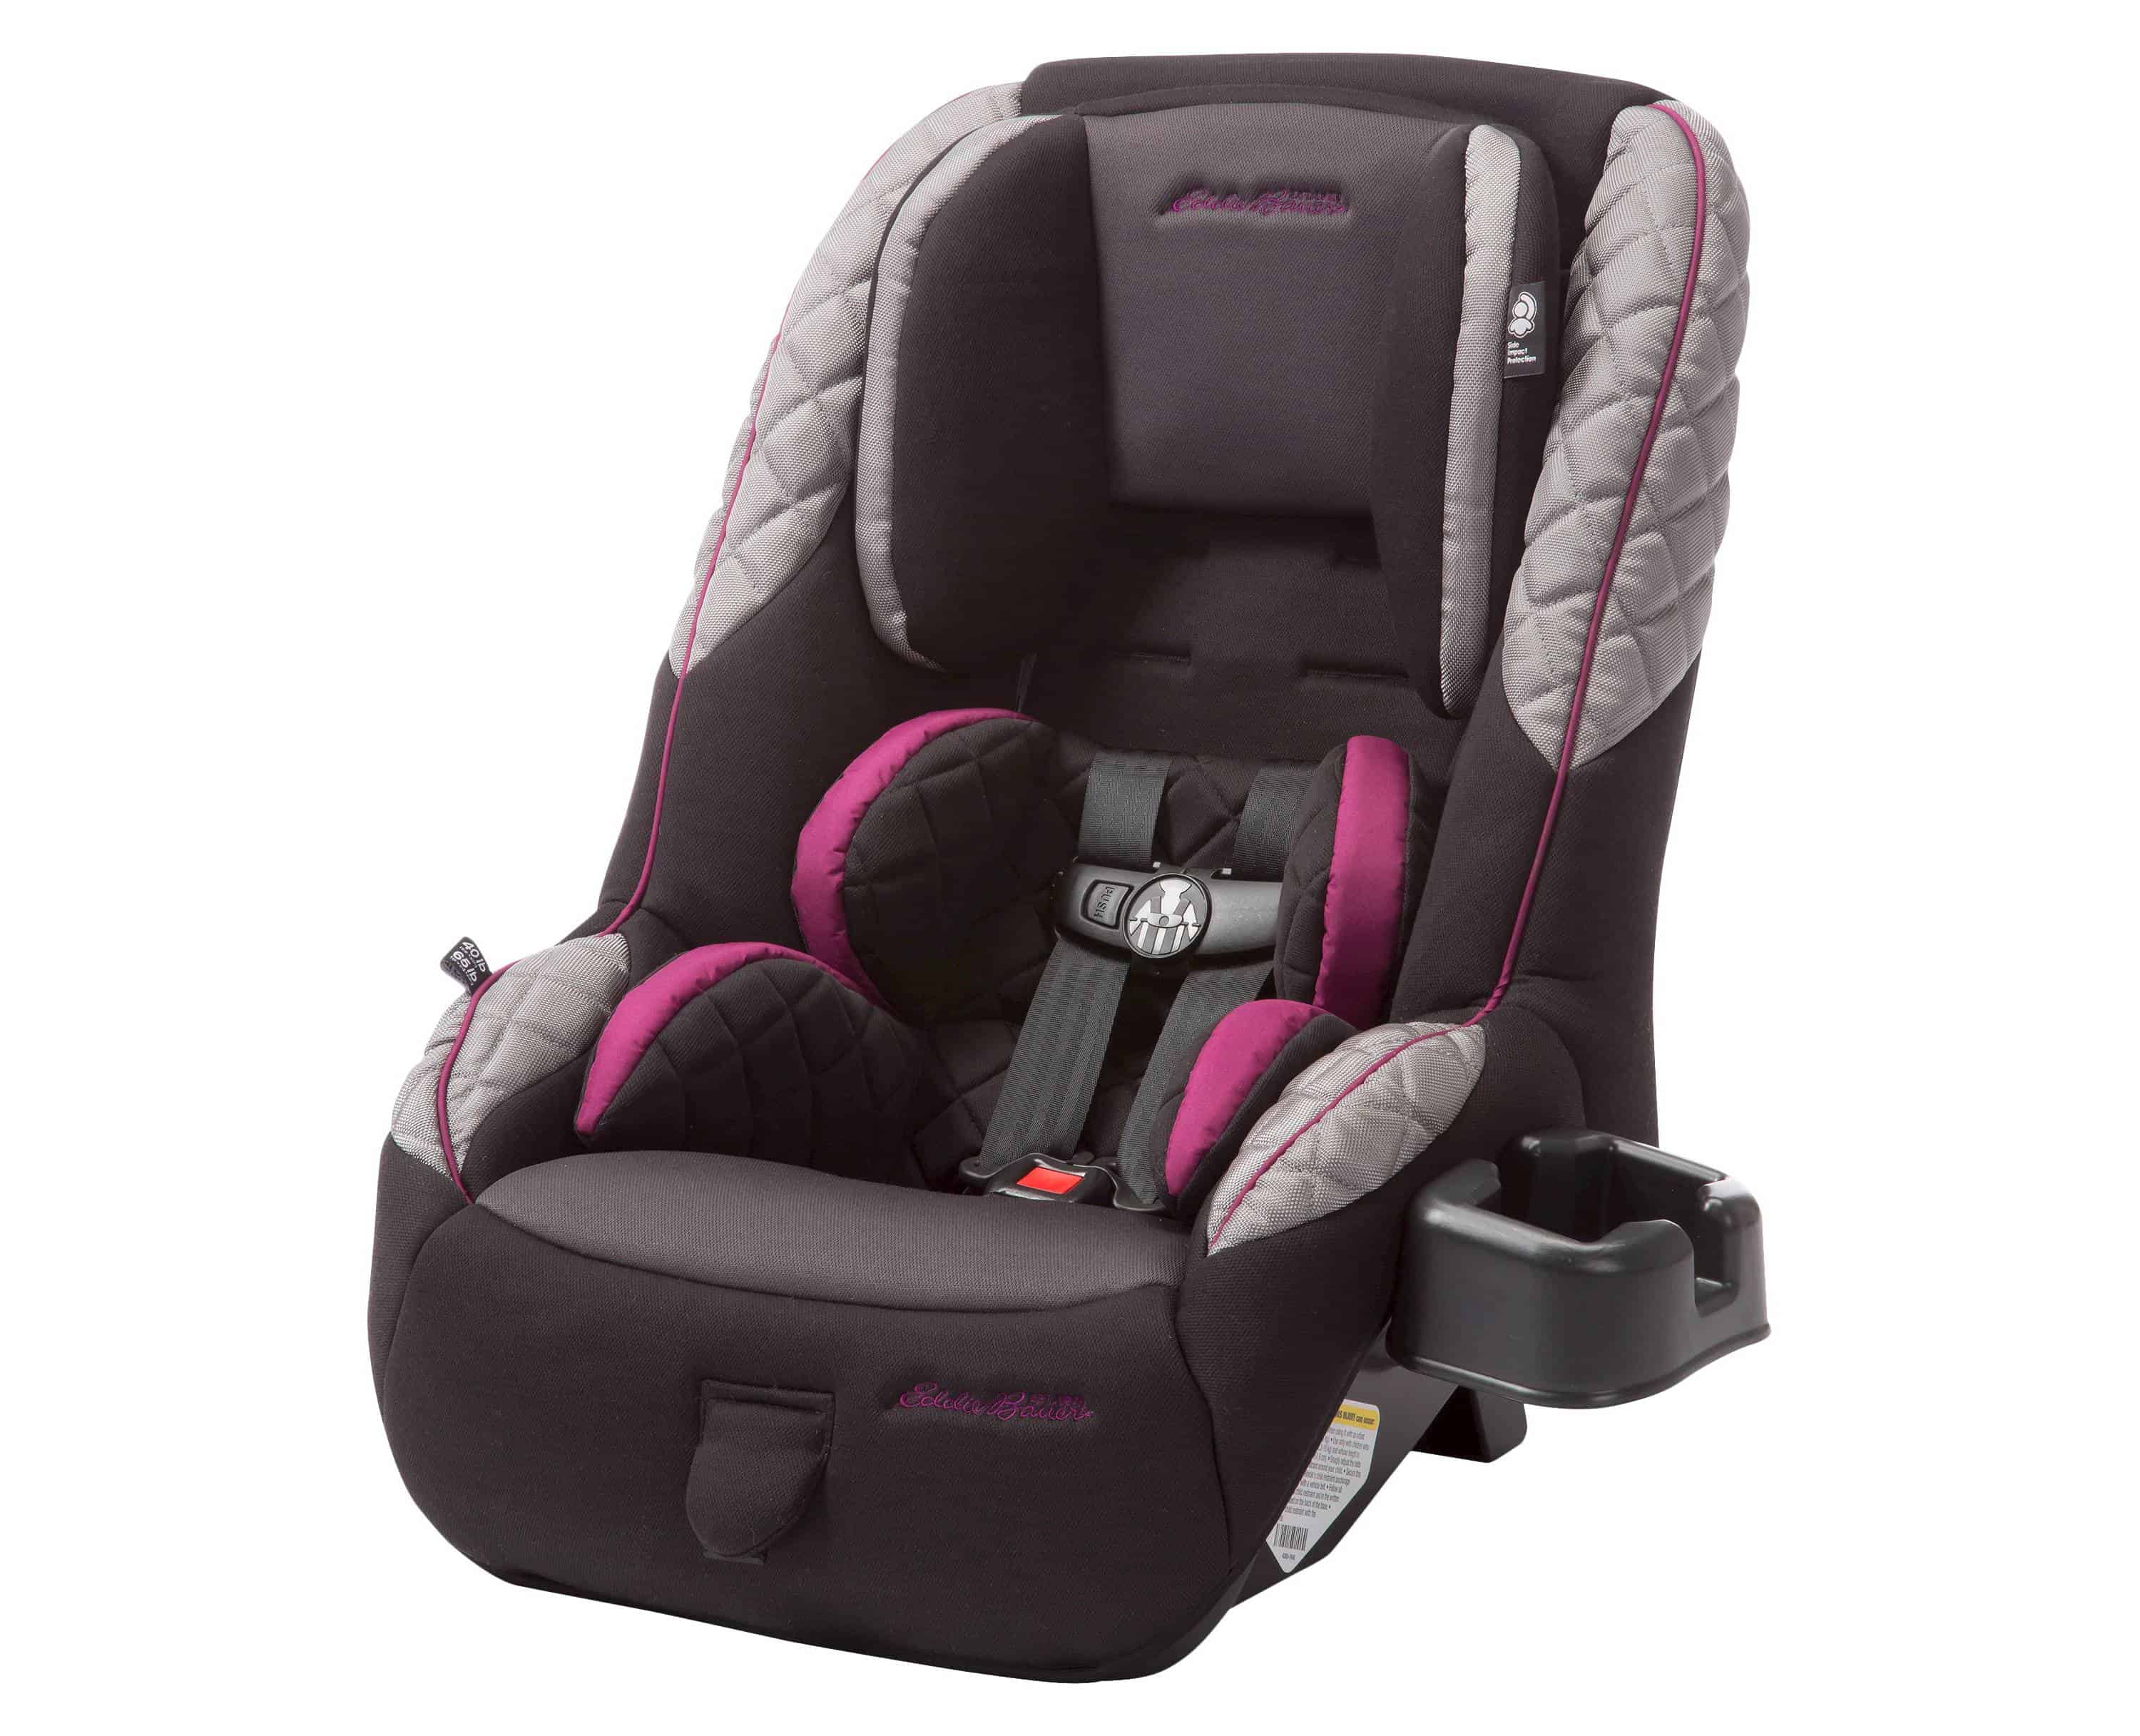 eddie bauer infant car seat and stroller